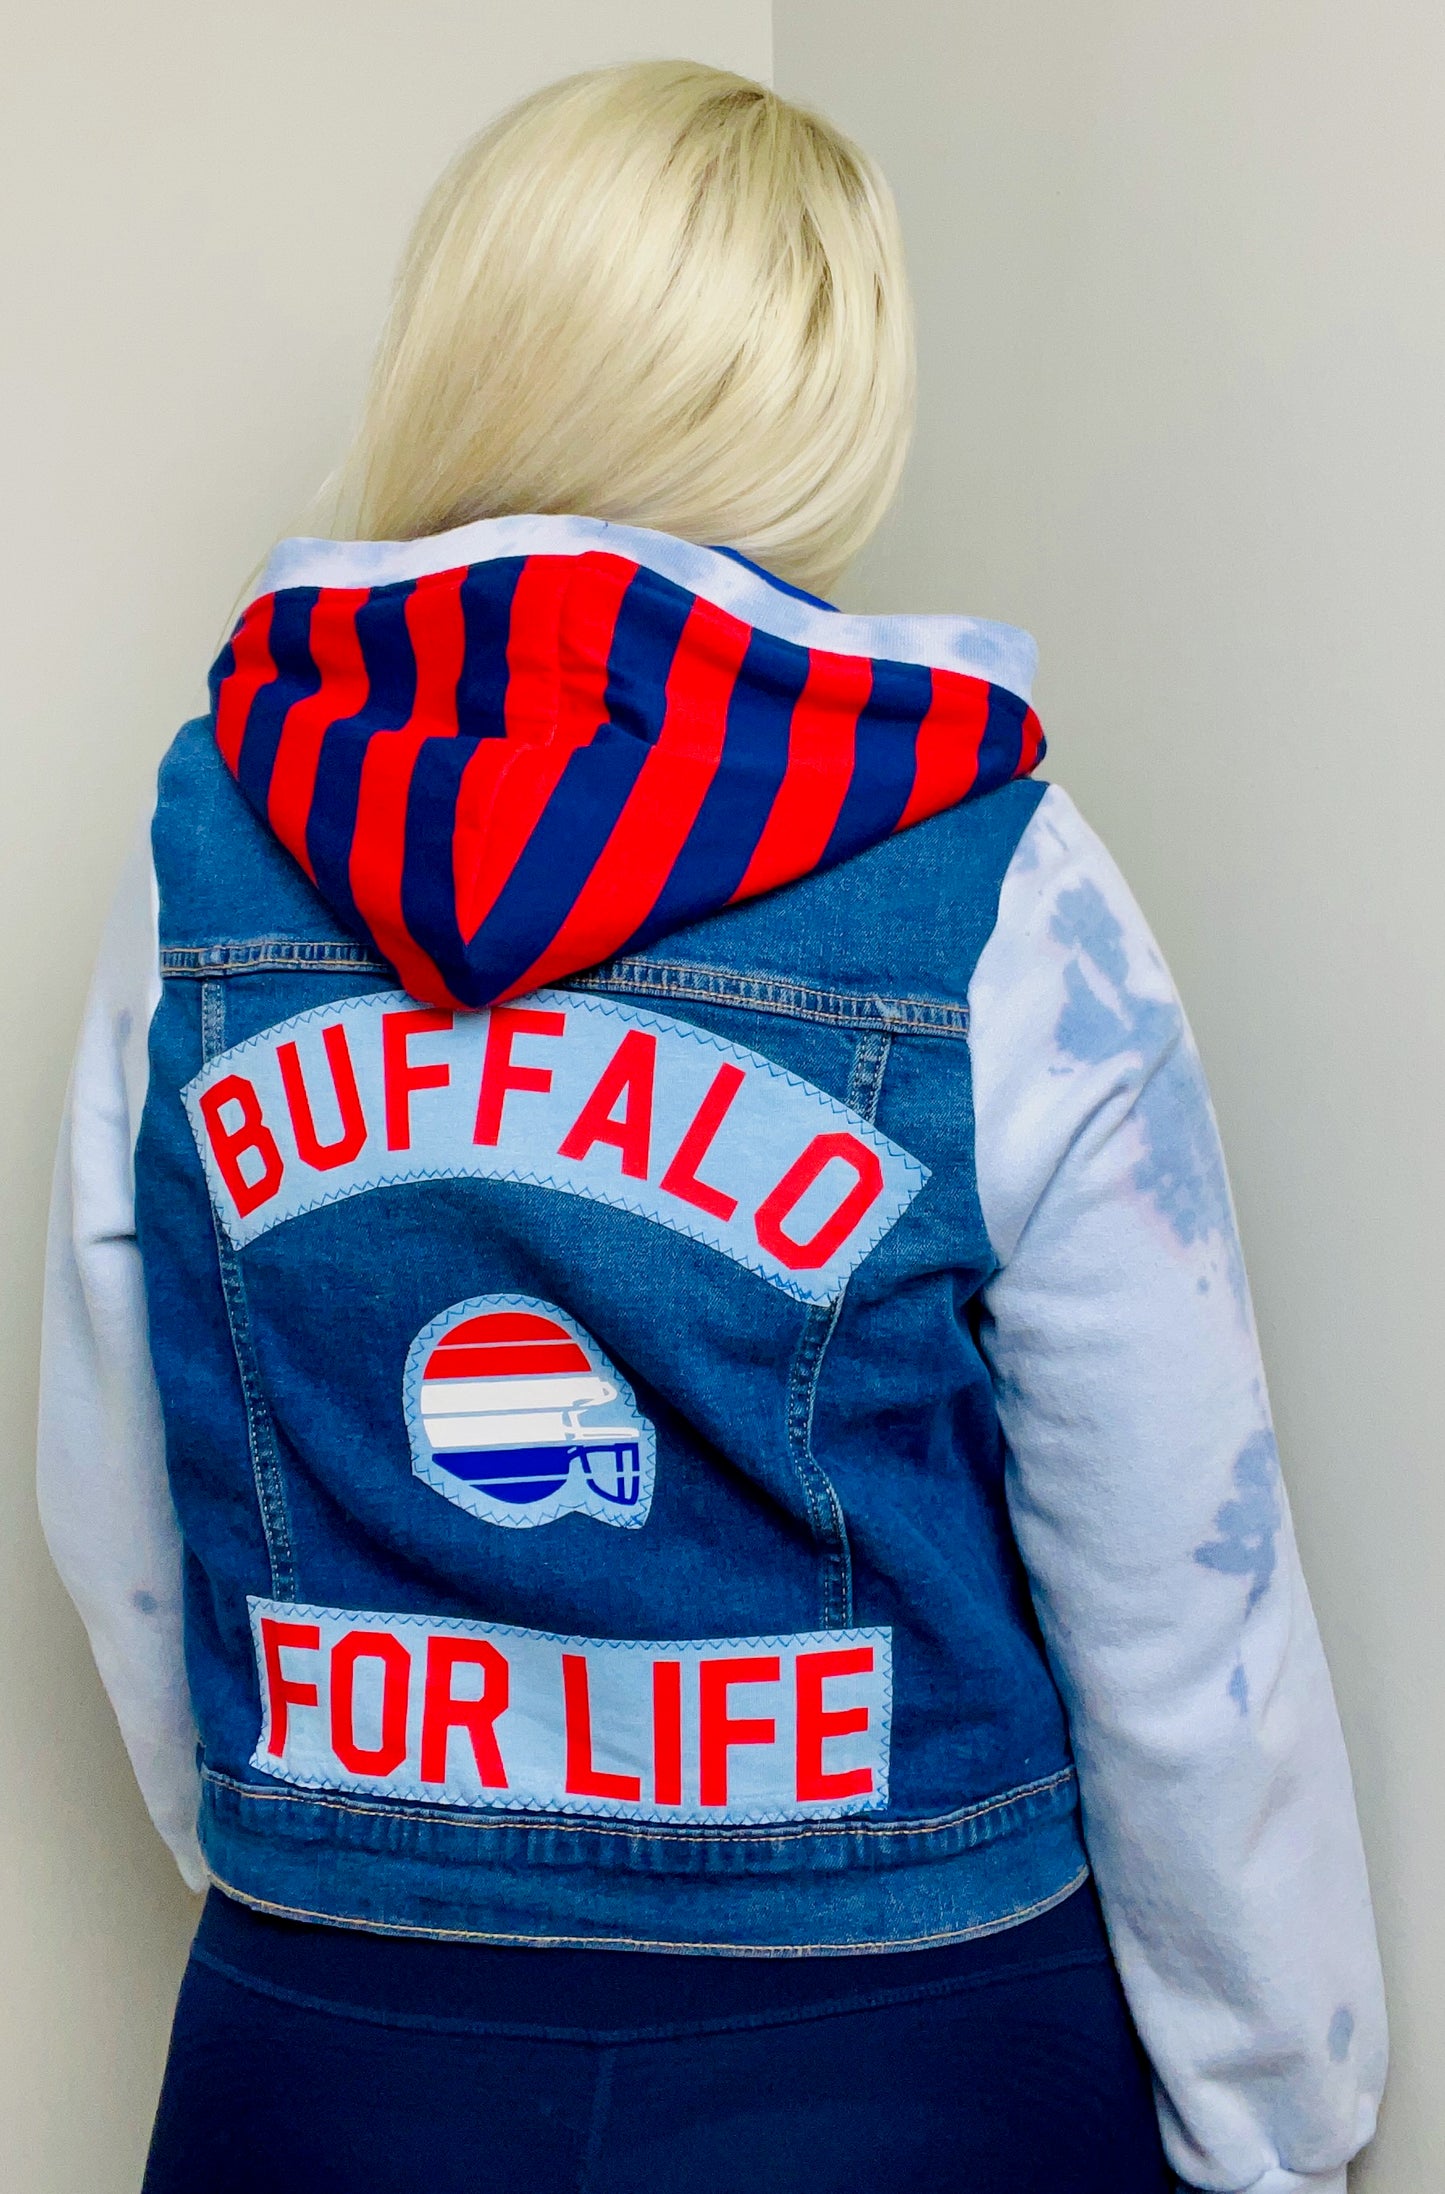 Buffalo For Life Denim Jacket Size- Women's M/L